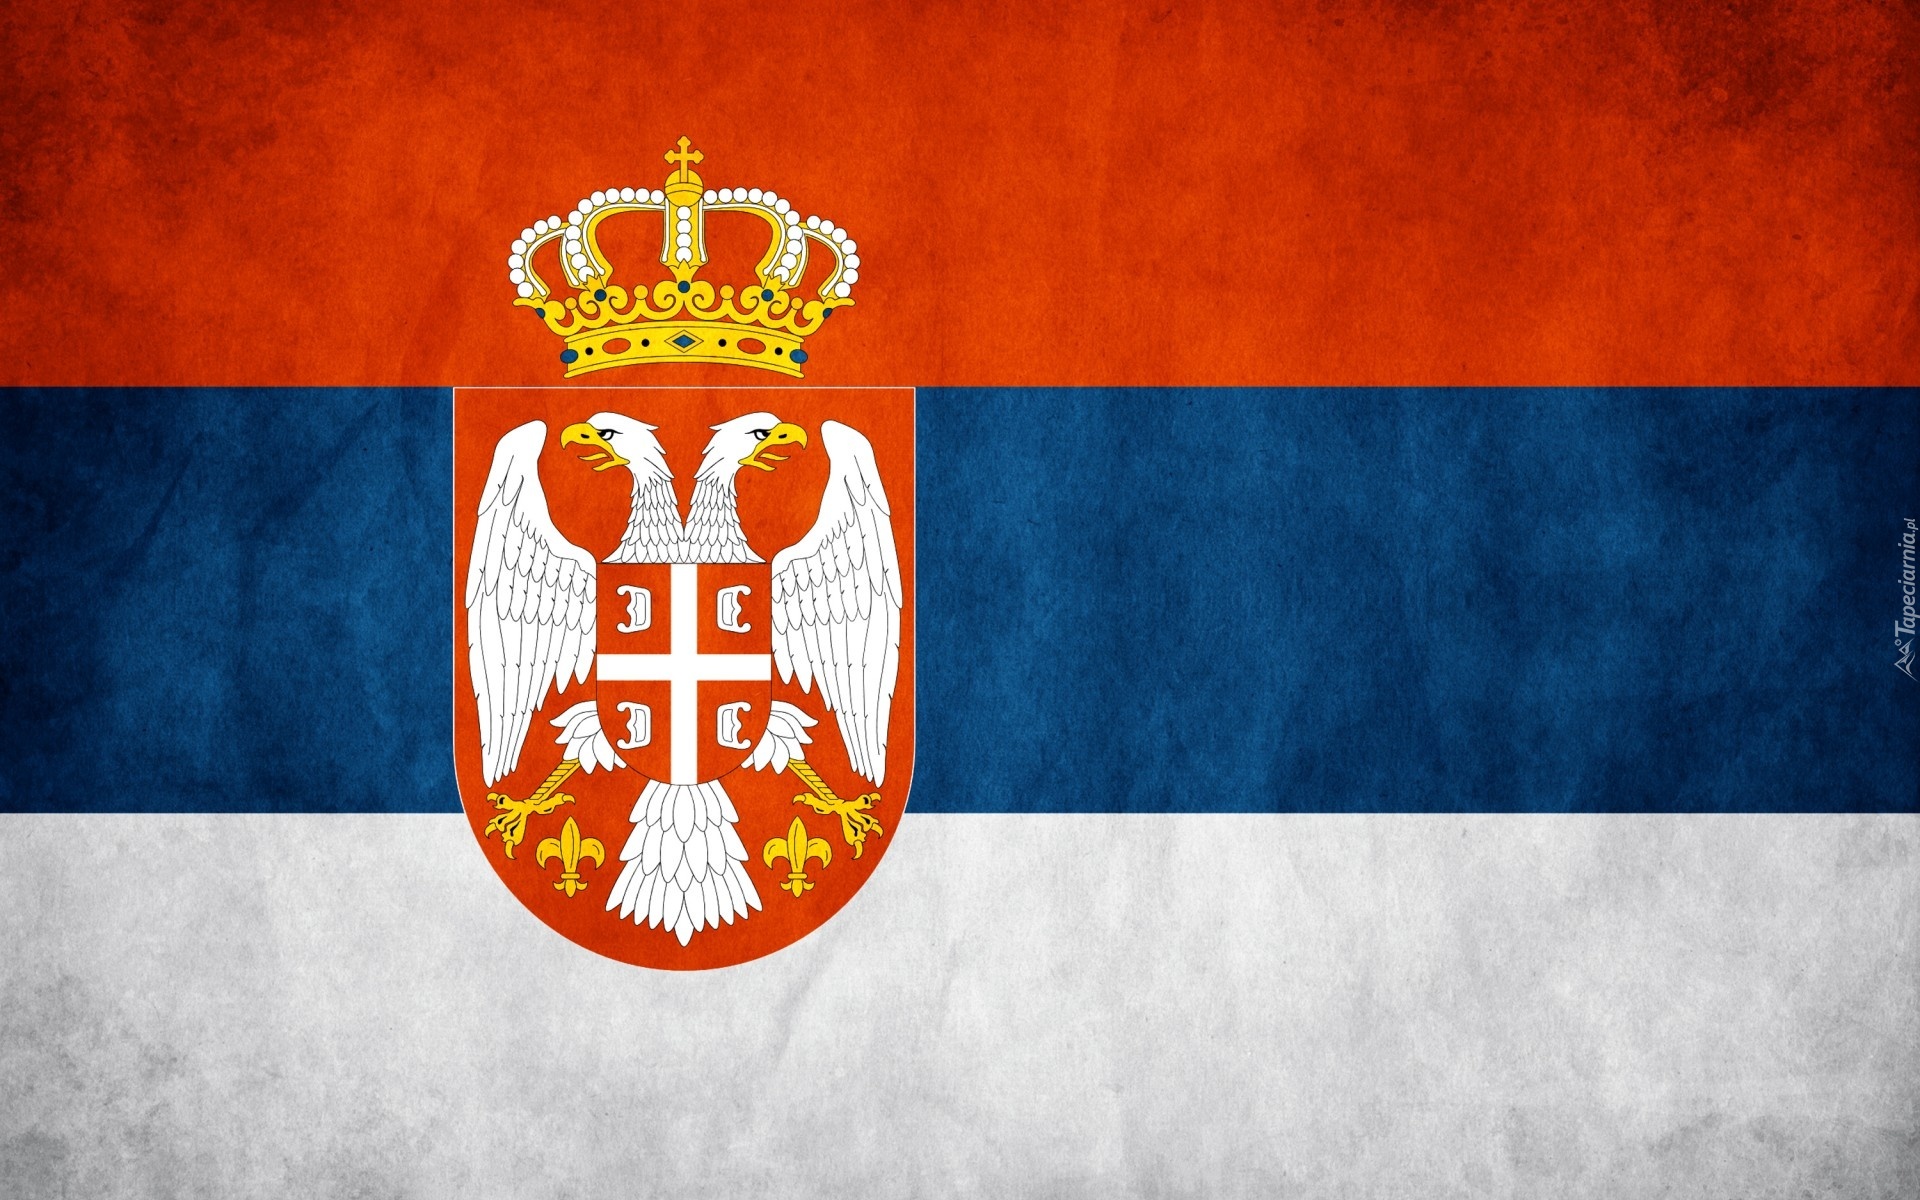 Flaga, Państwowa, Serbia